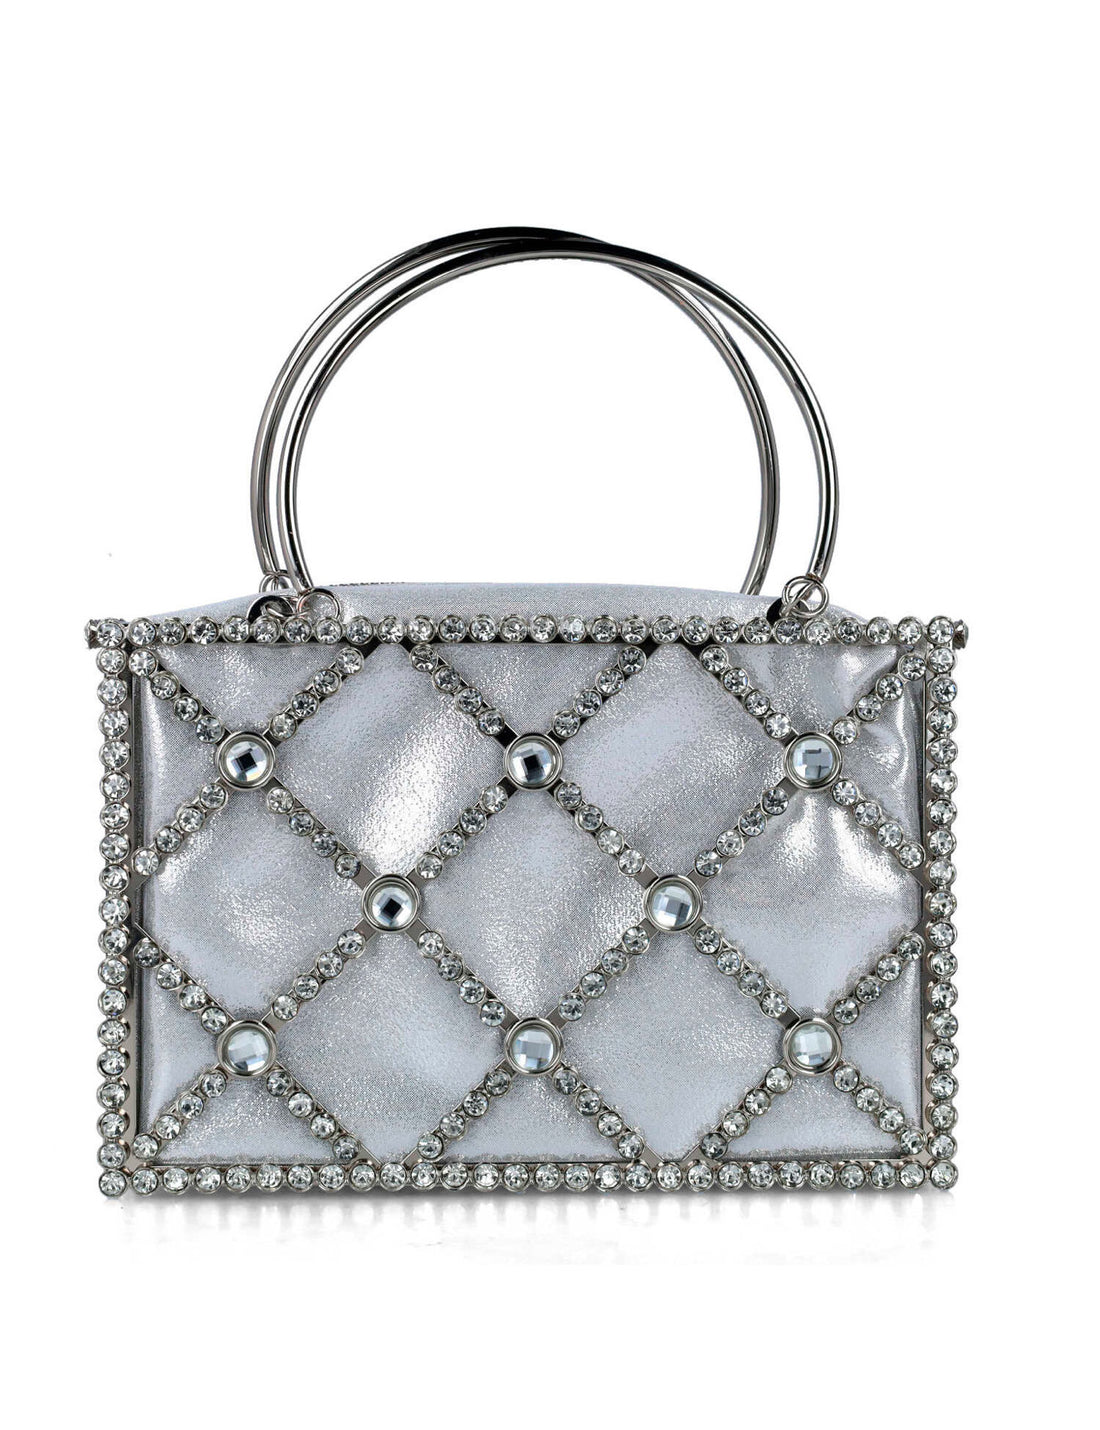 Embellished Square Handbag With Round Straps_85720_09_01